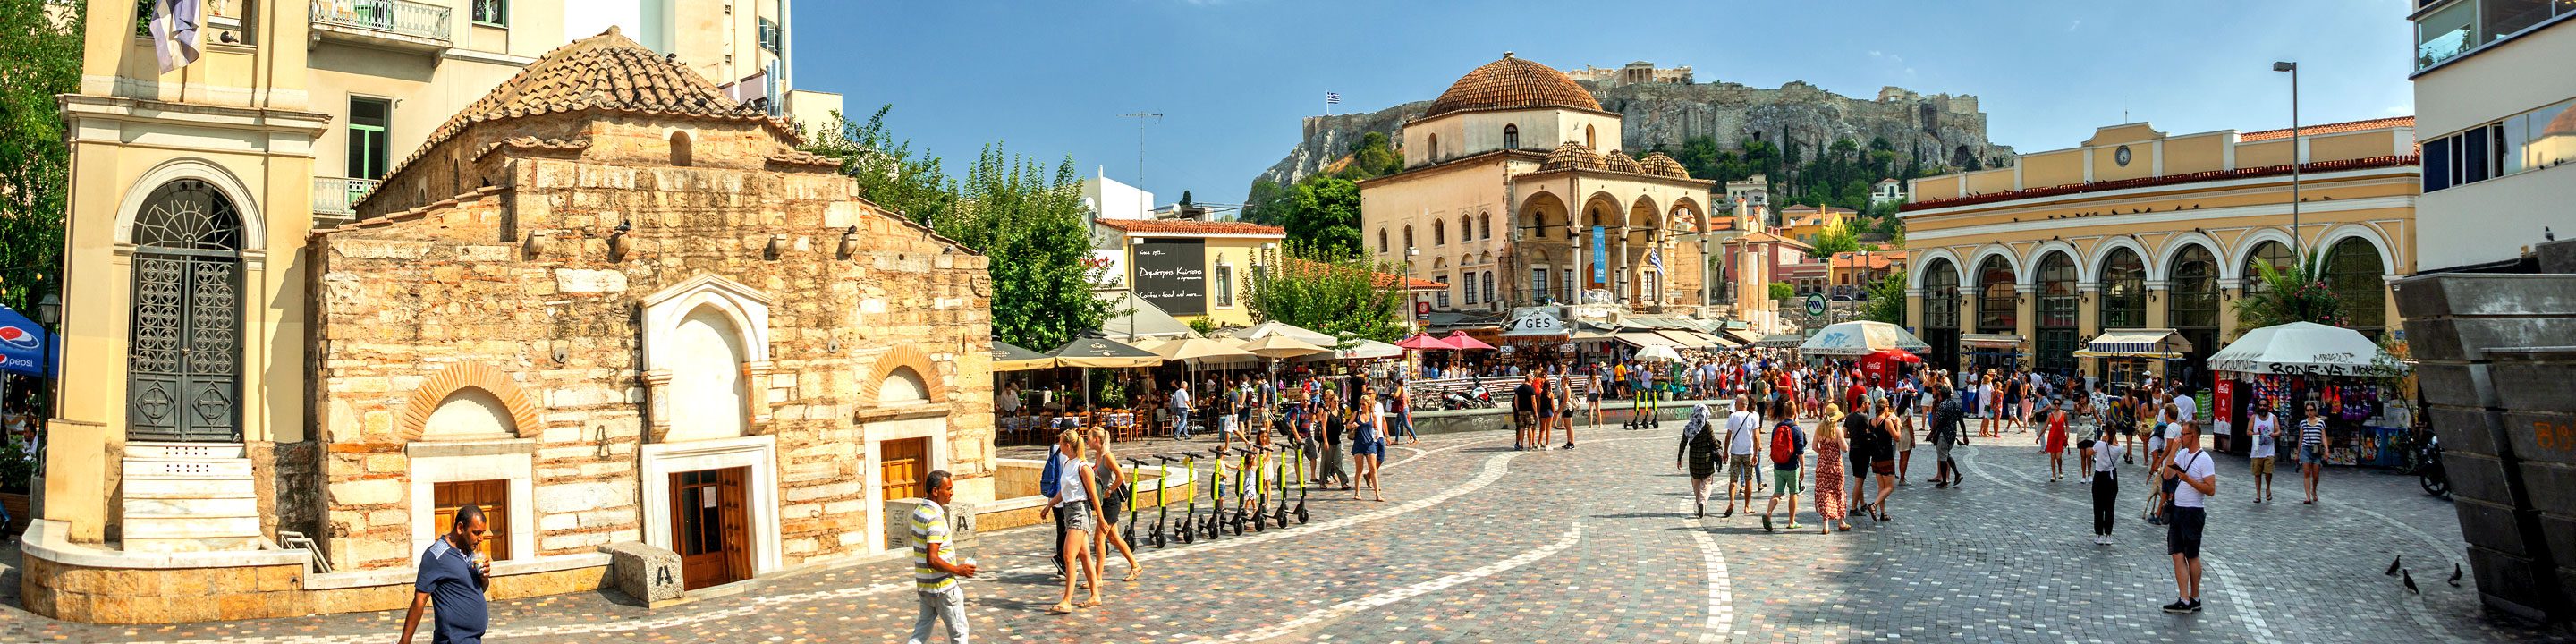 Monastiraki Square in Athens